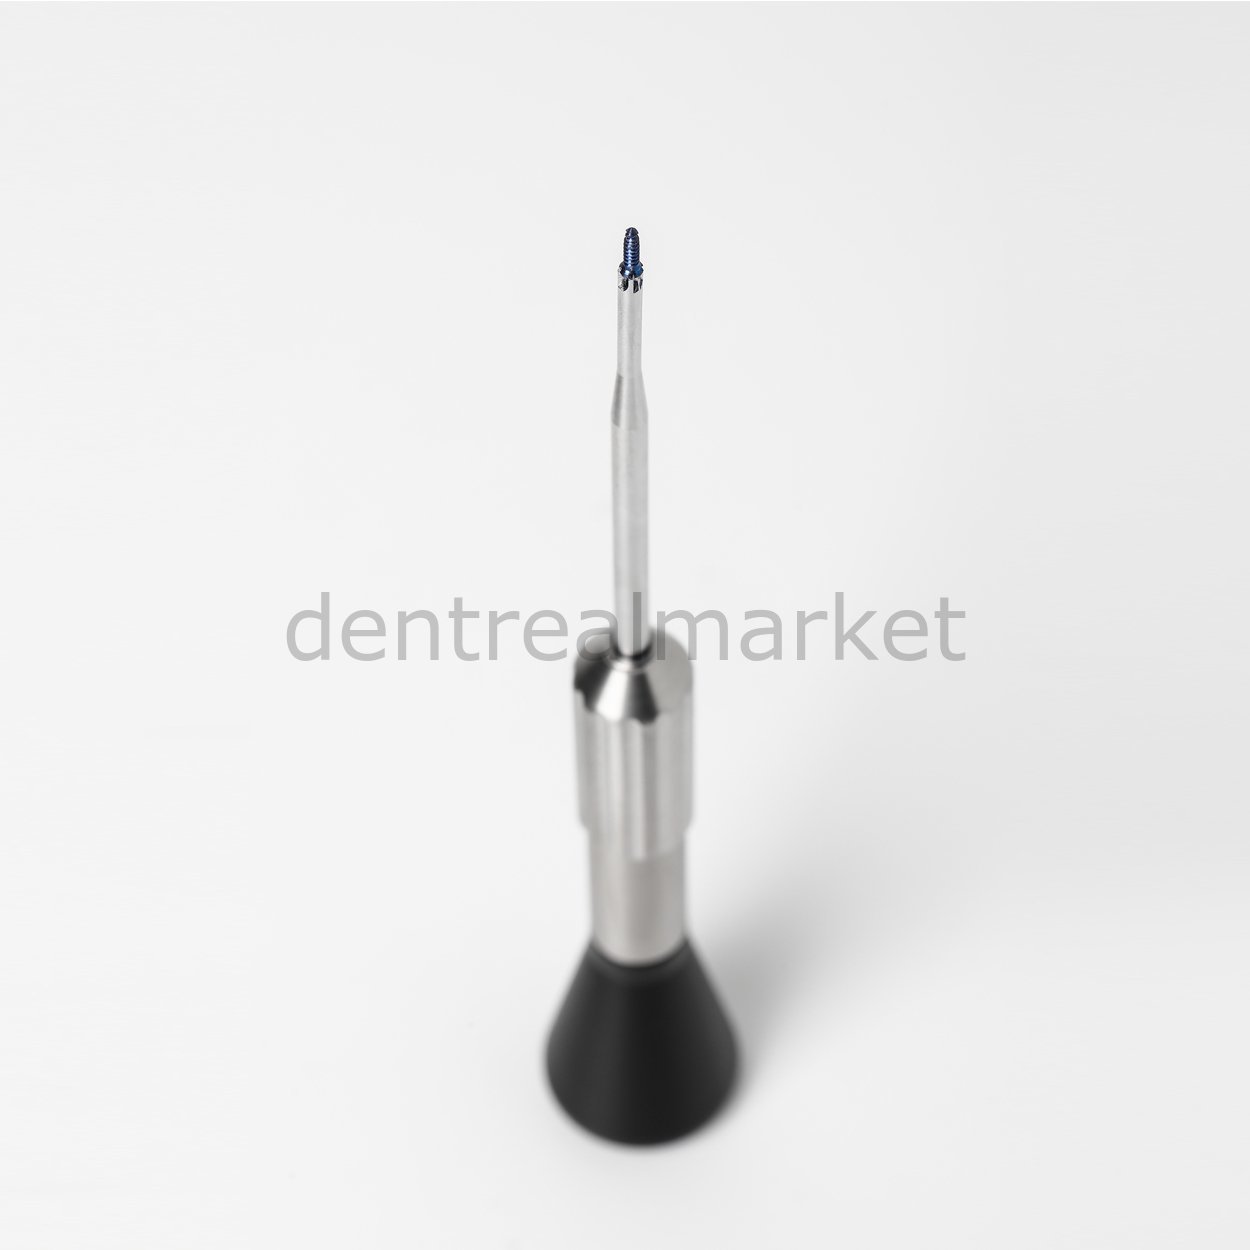 DentrealStore - Dentreal Titanium Maxillofacial Plate Mini Bone Plate Set - 2,0 mm